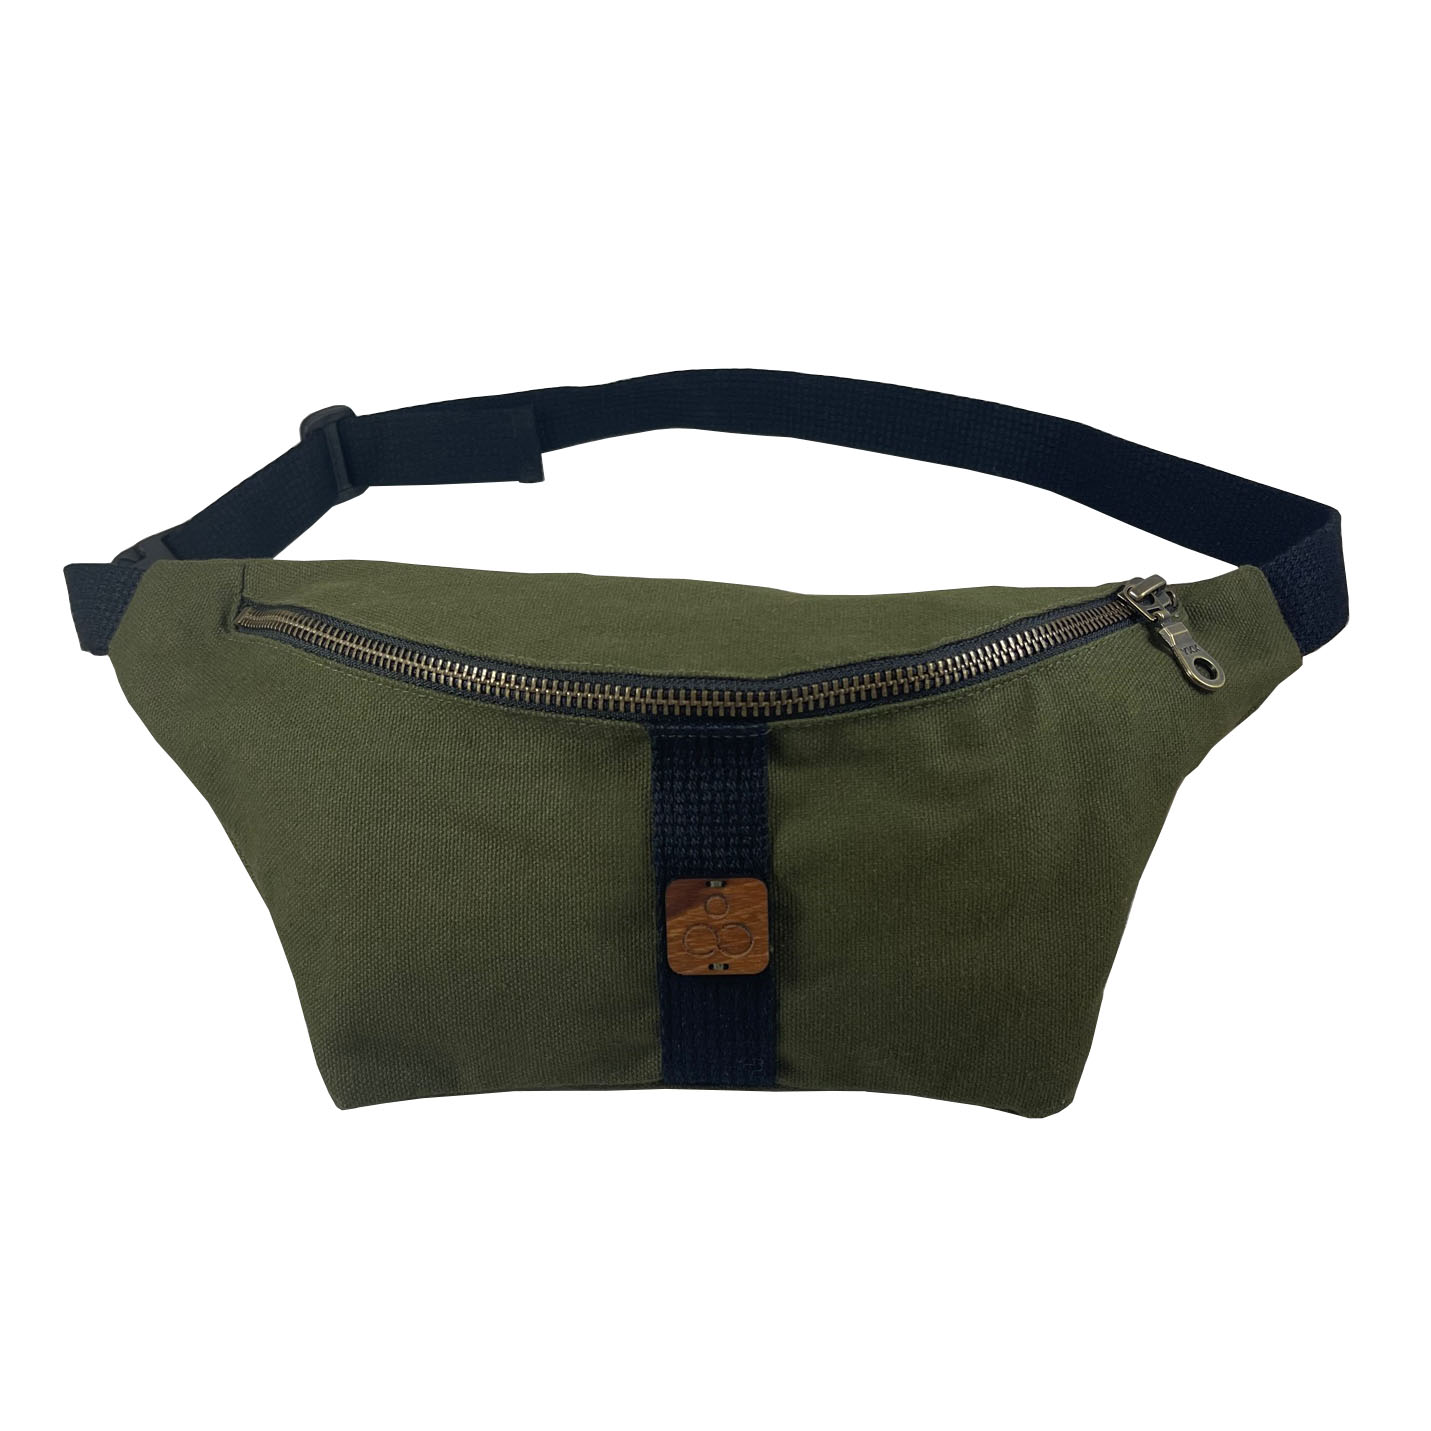 Olive canvas waist bag